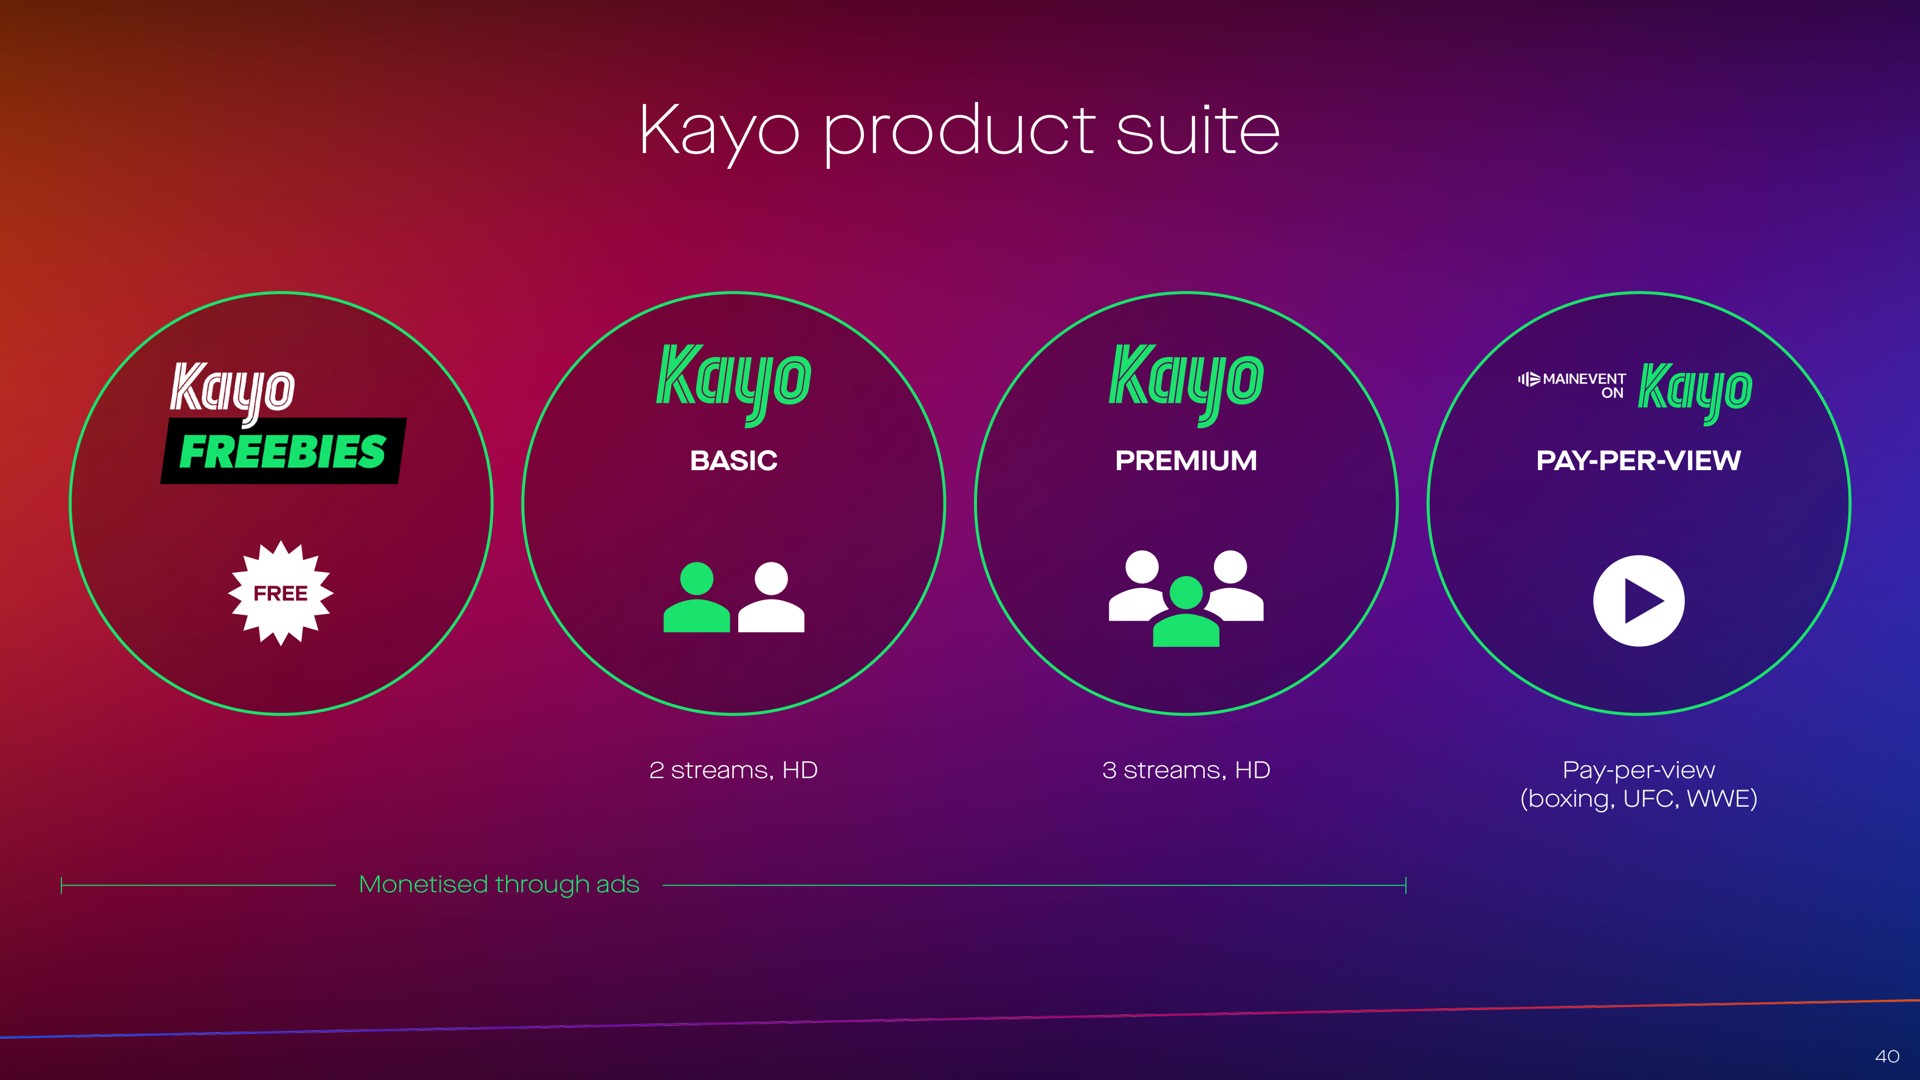 kayo product suite i | Foxtel